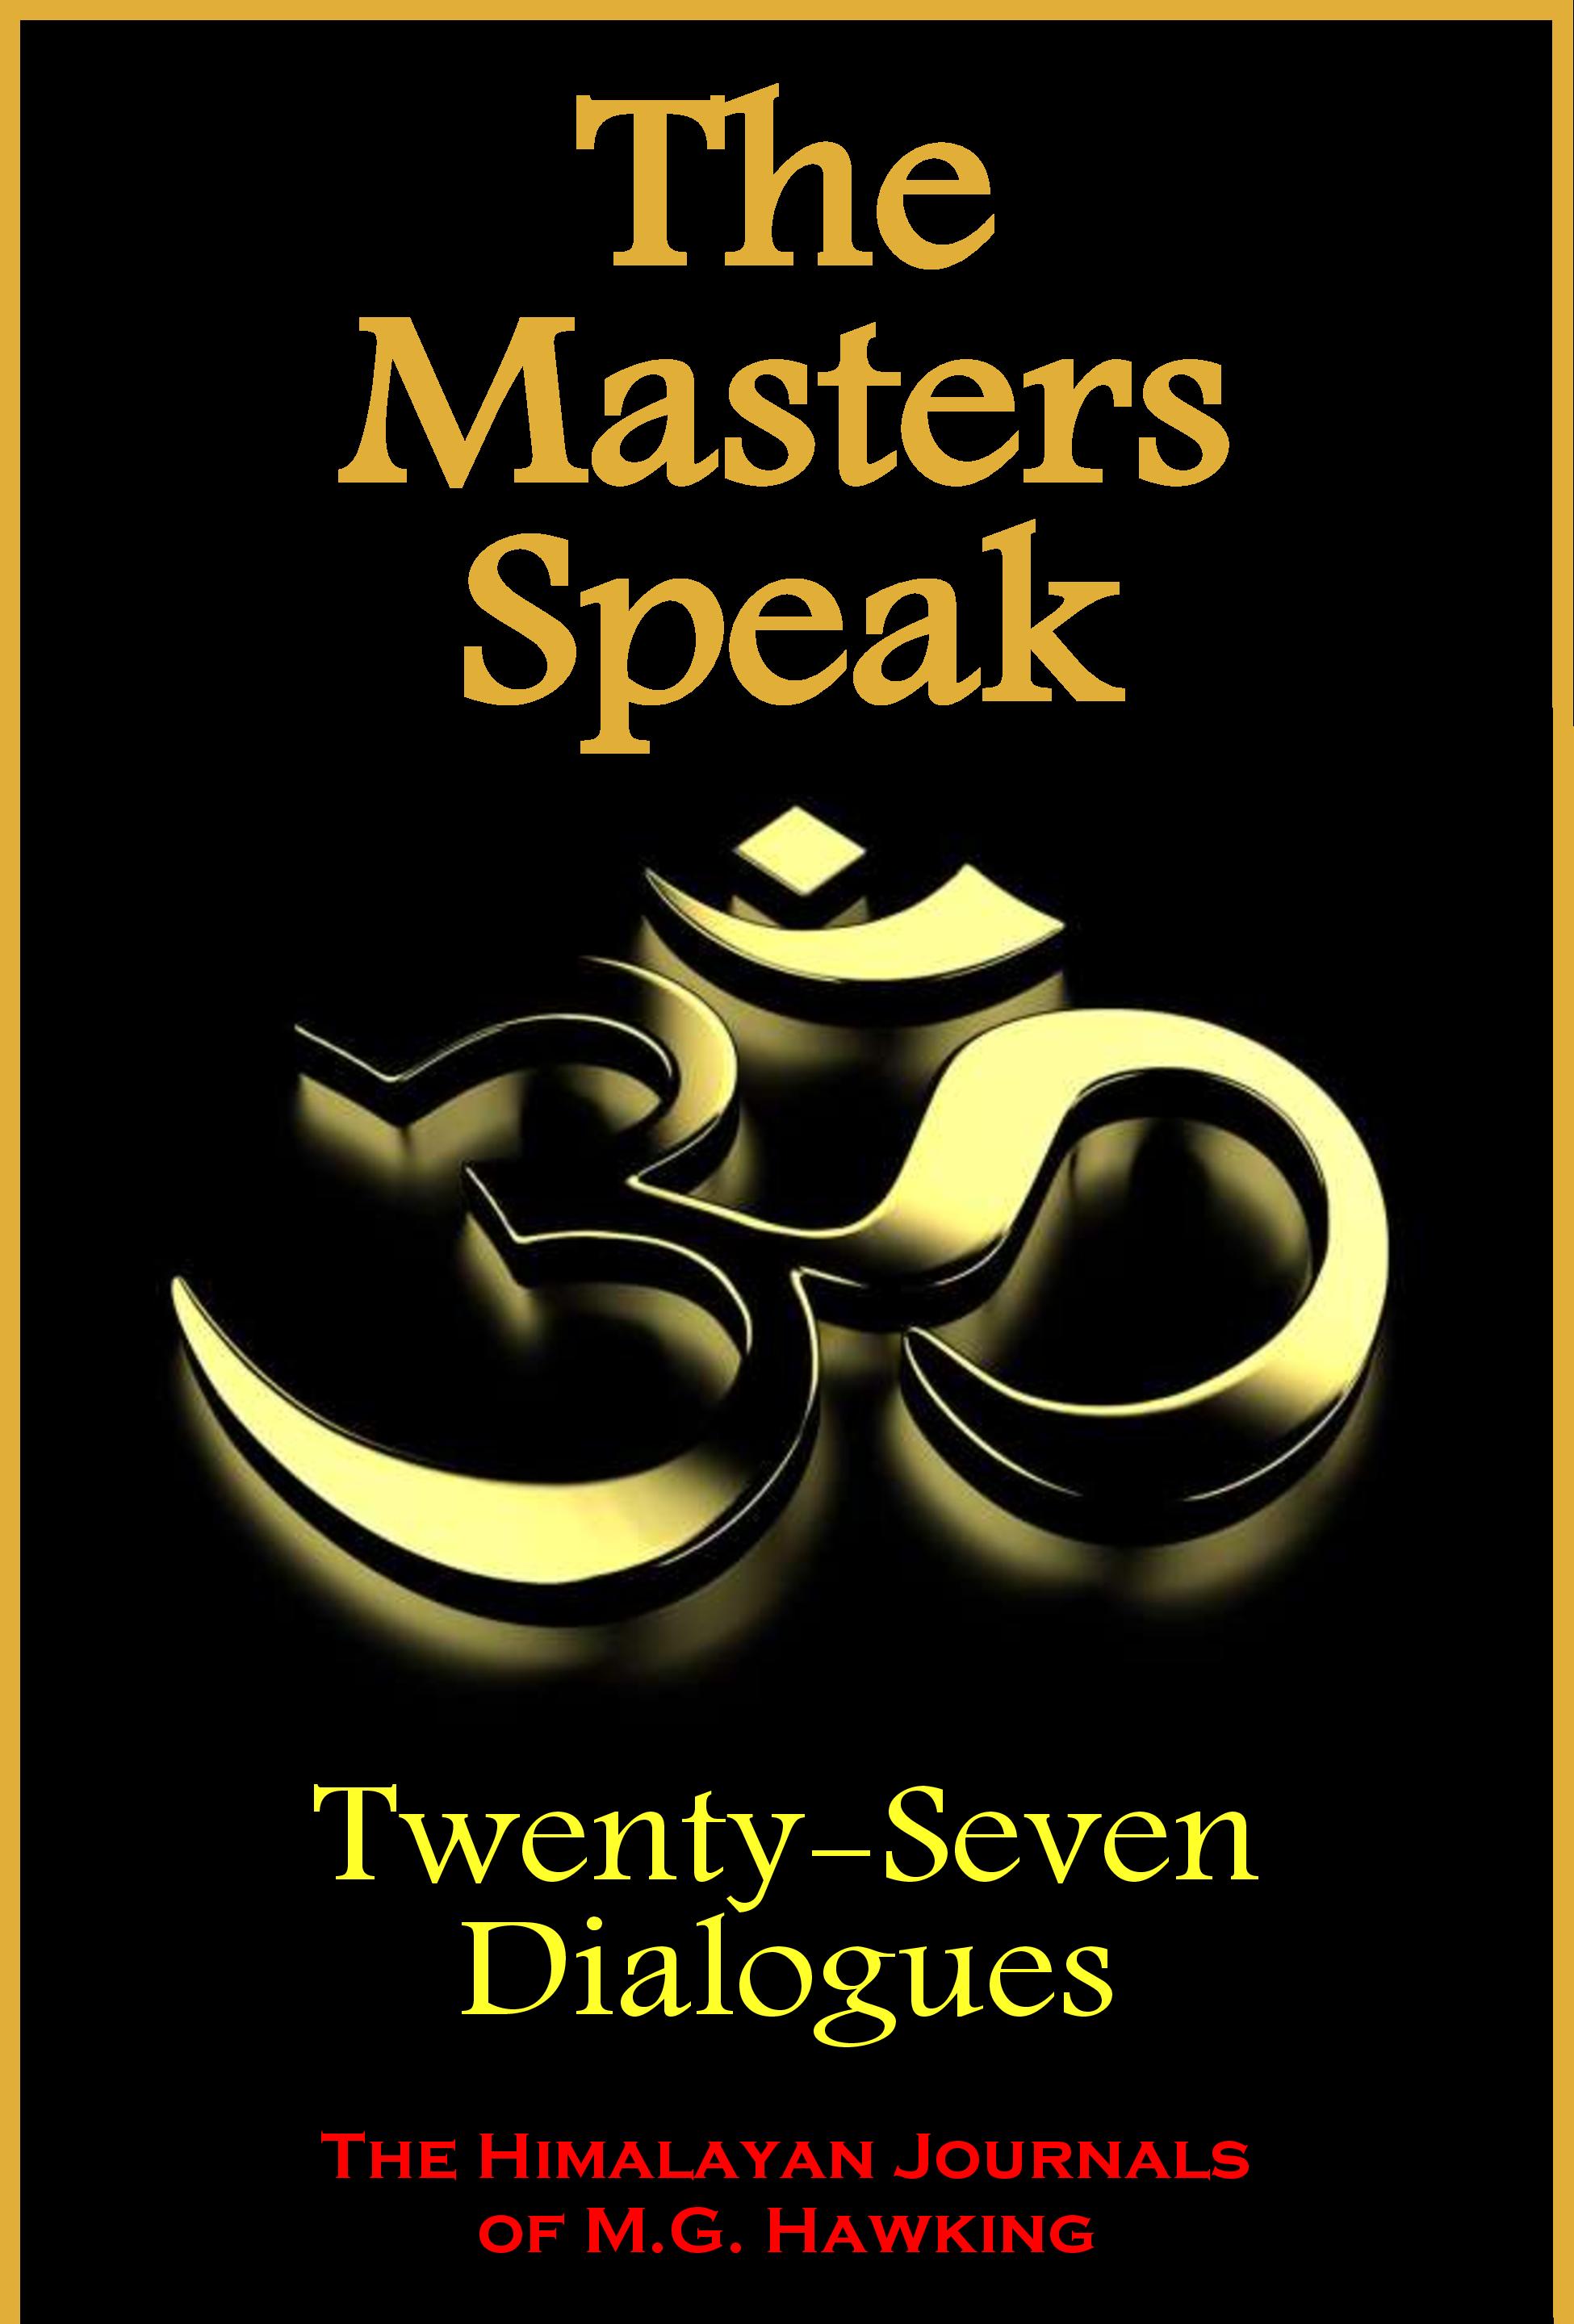 The Masters Speak book cover